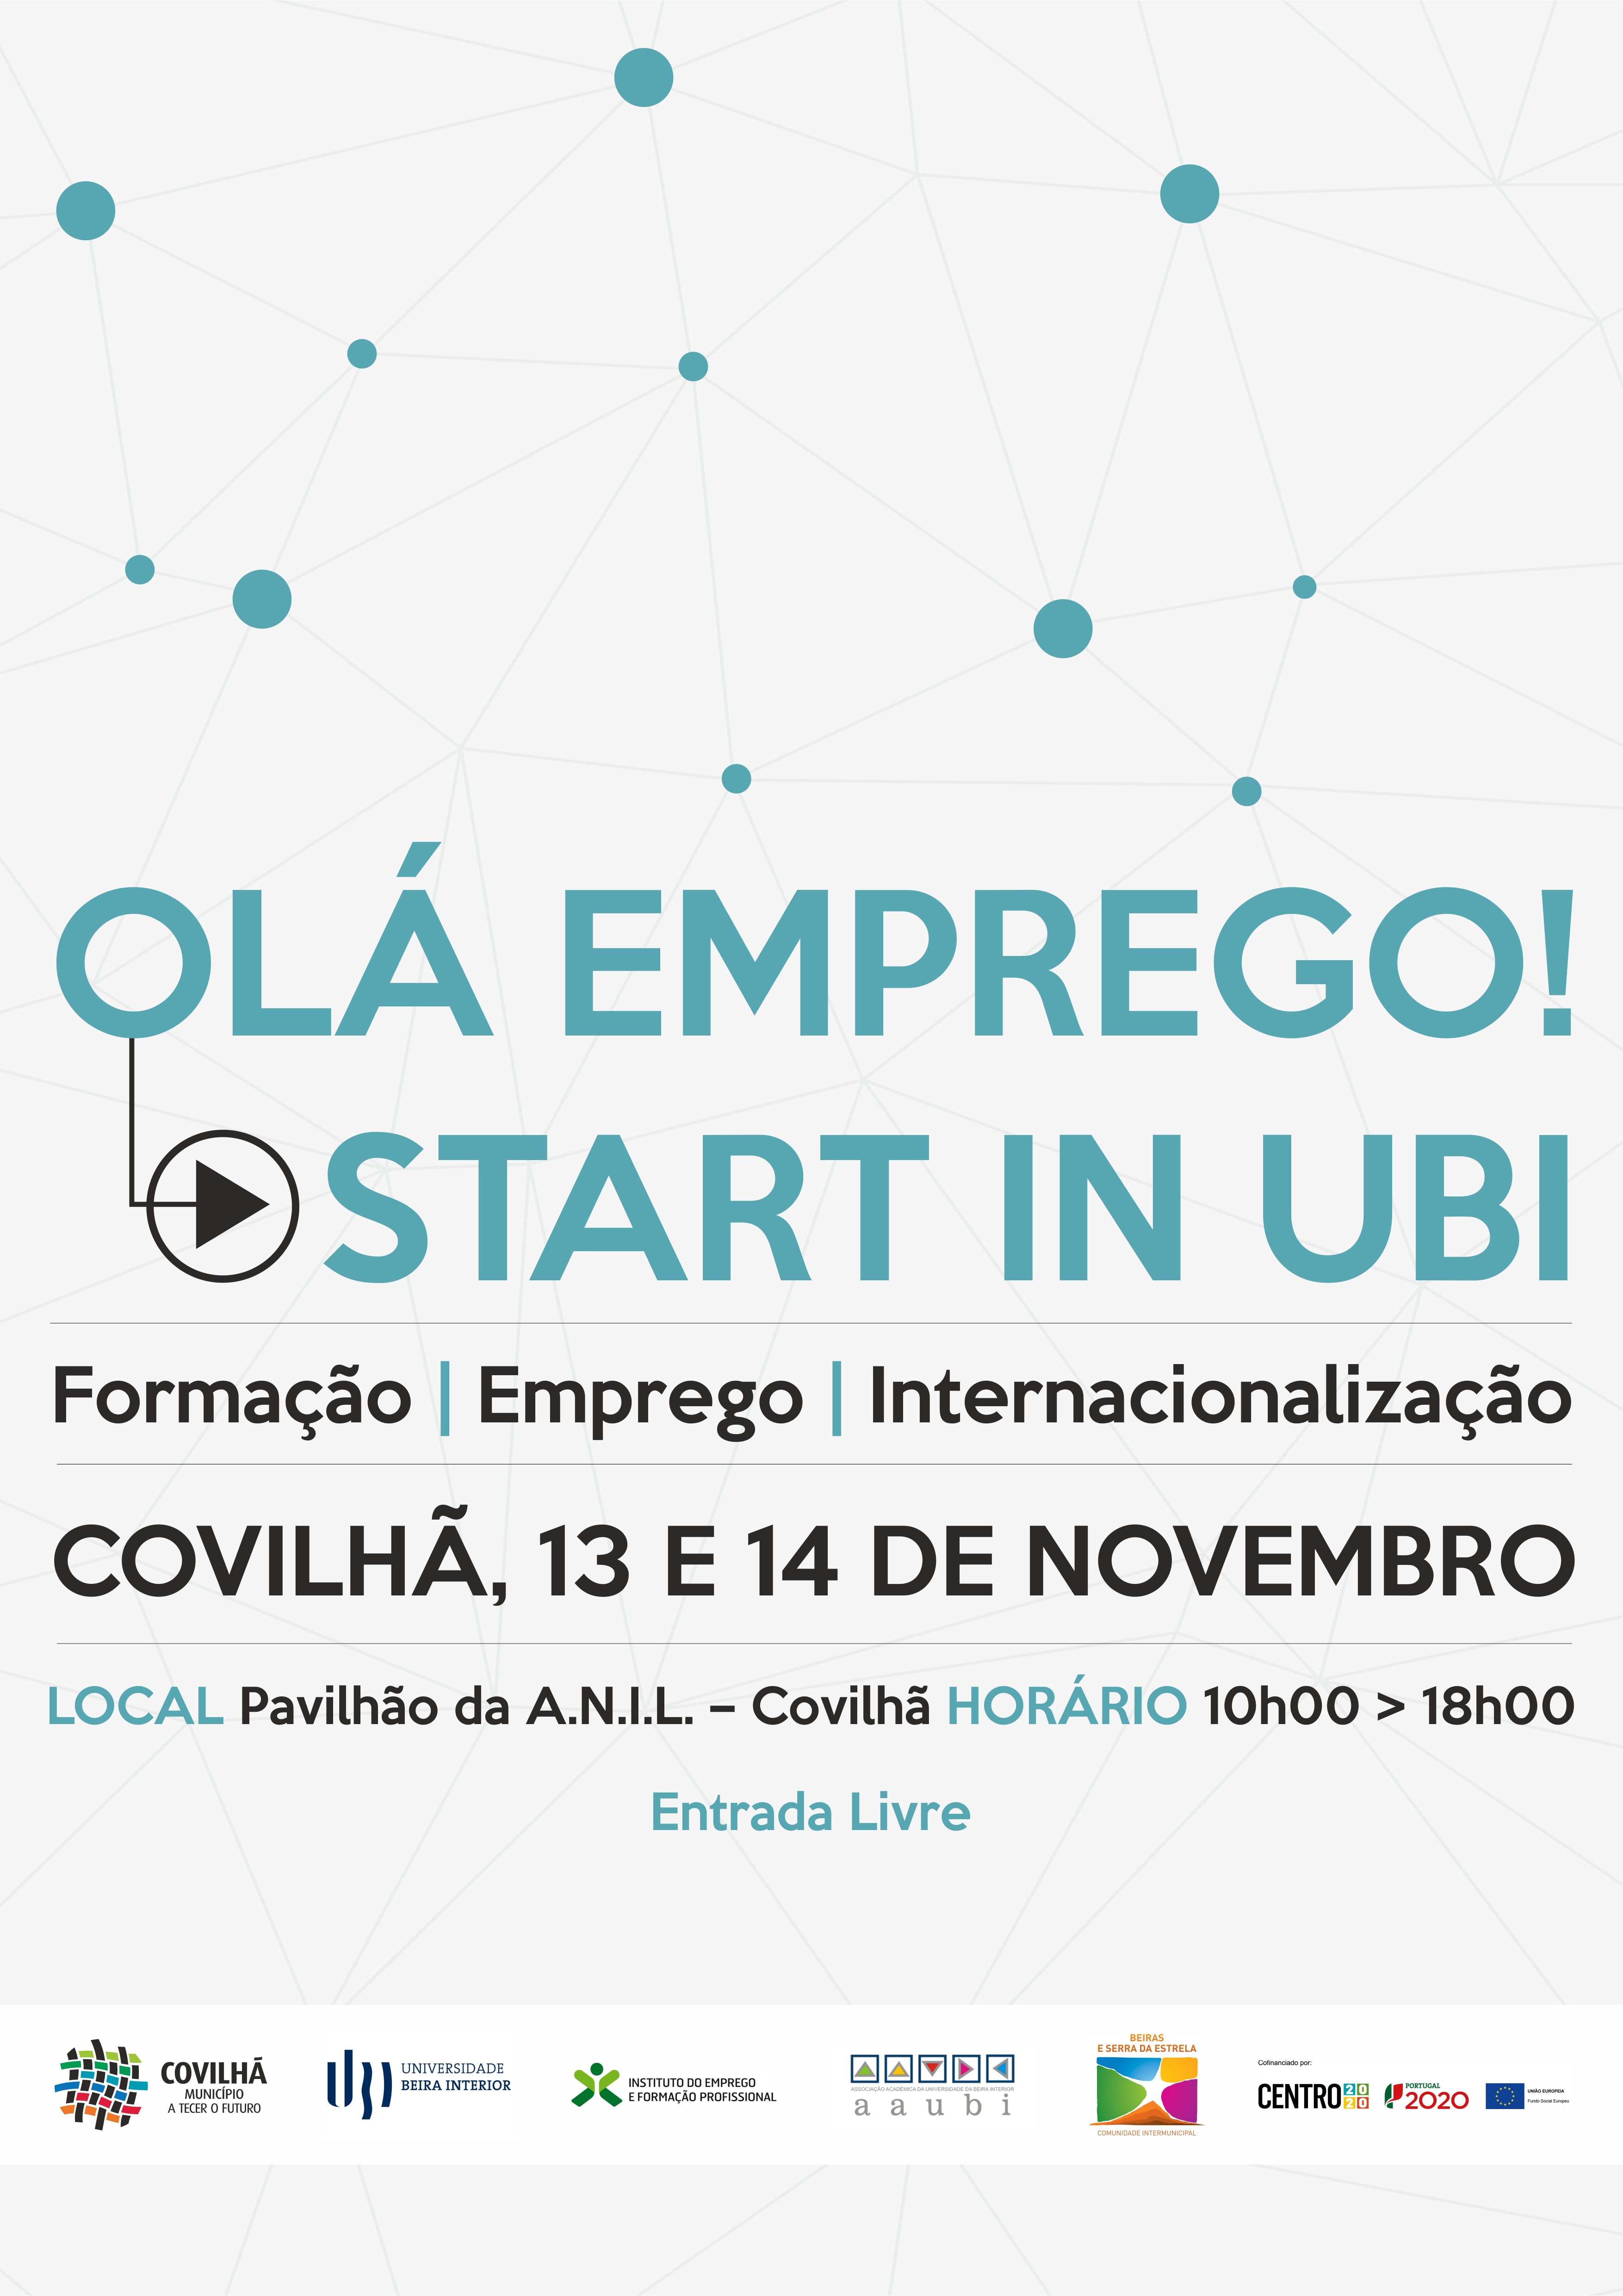 Adecco participa em “Olá emprego! Start in UBI”